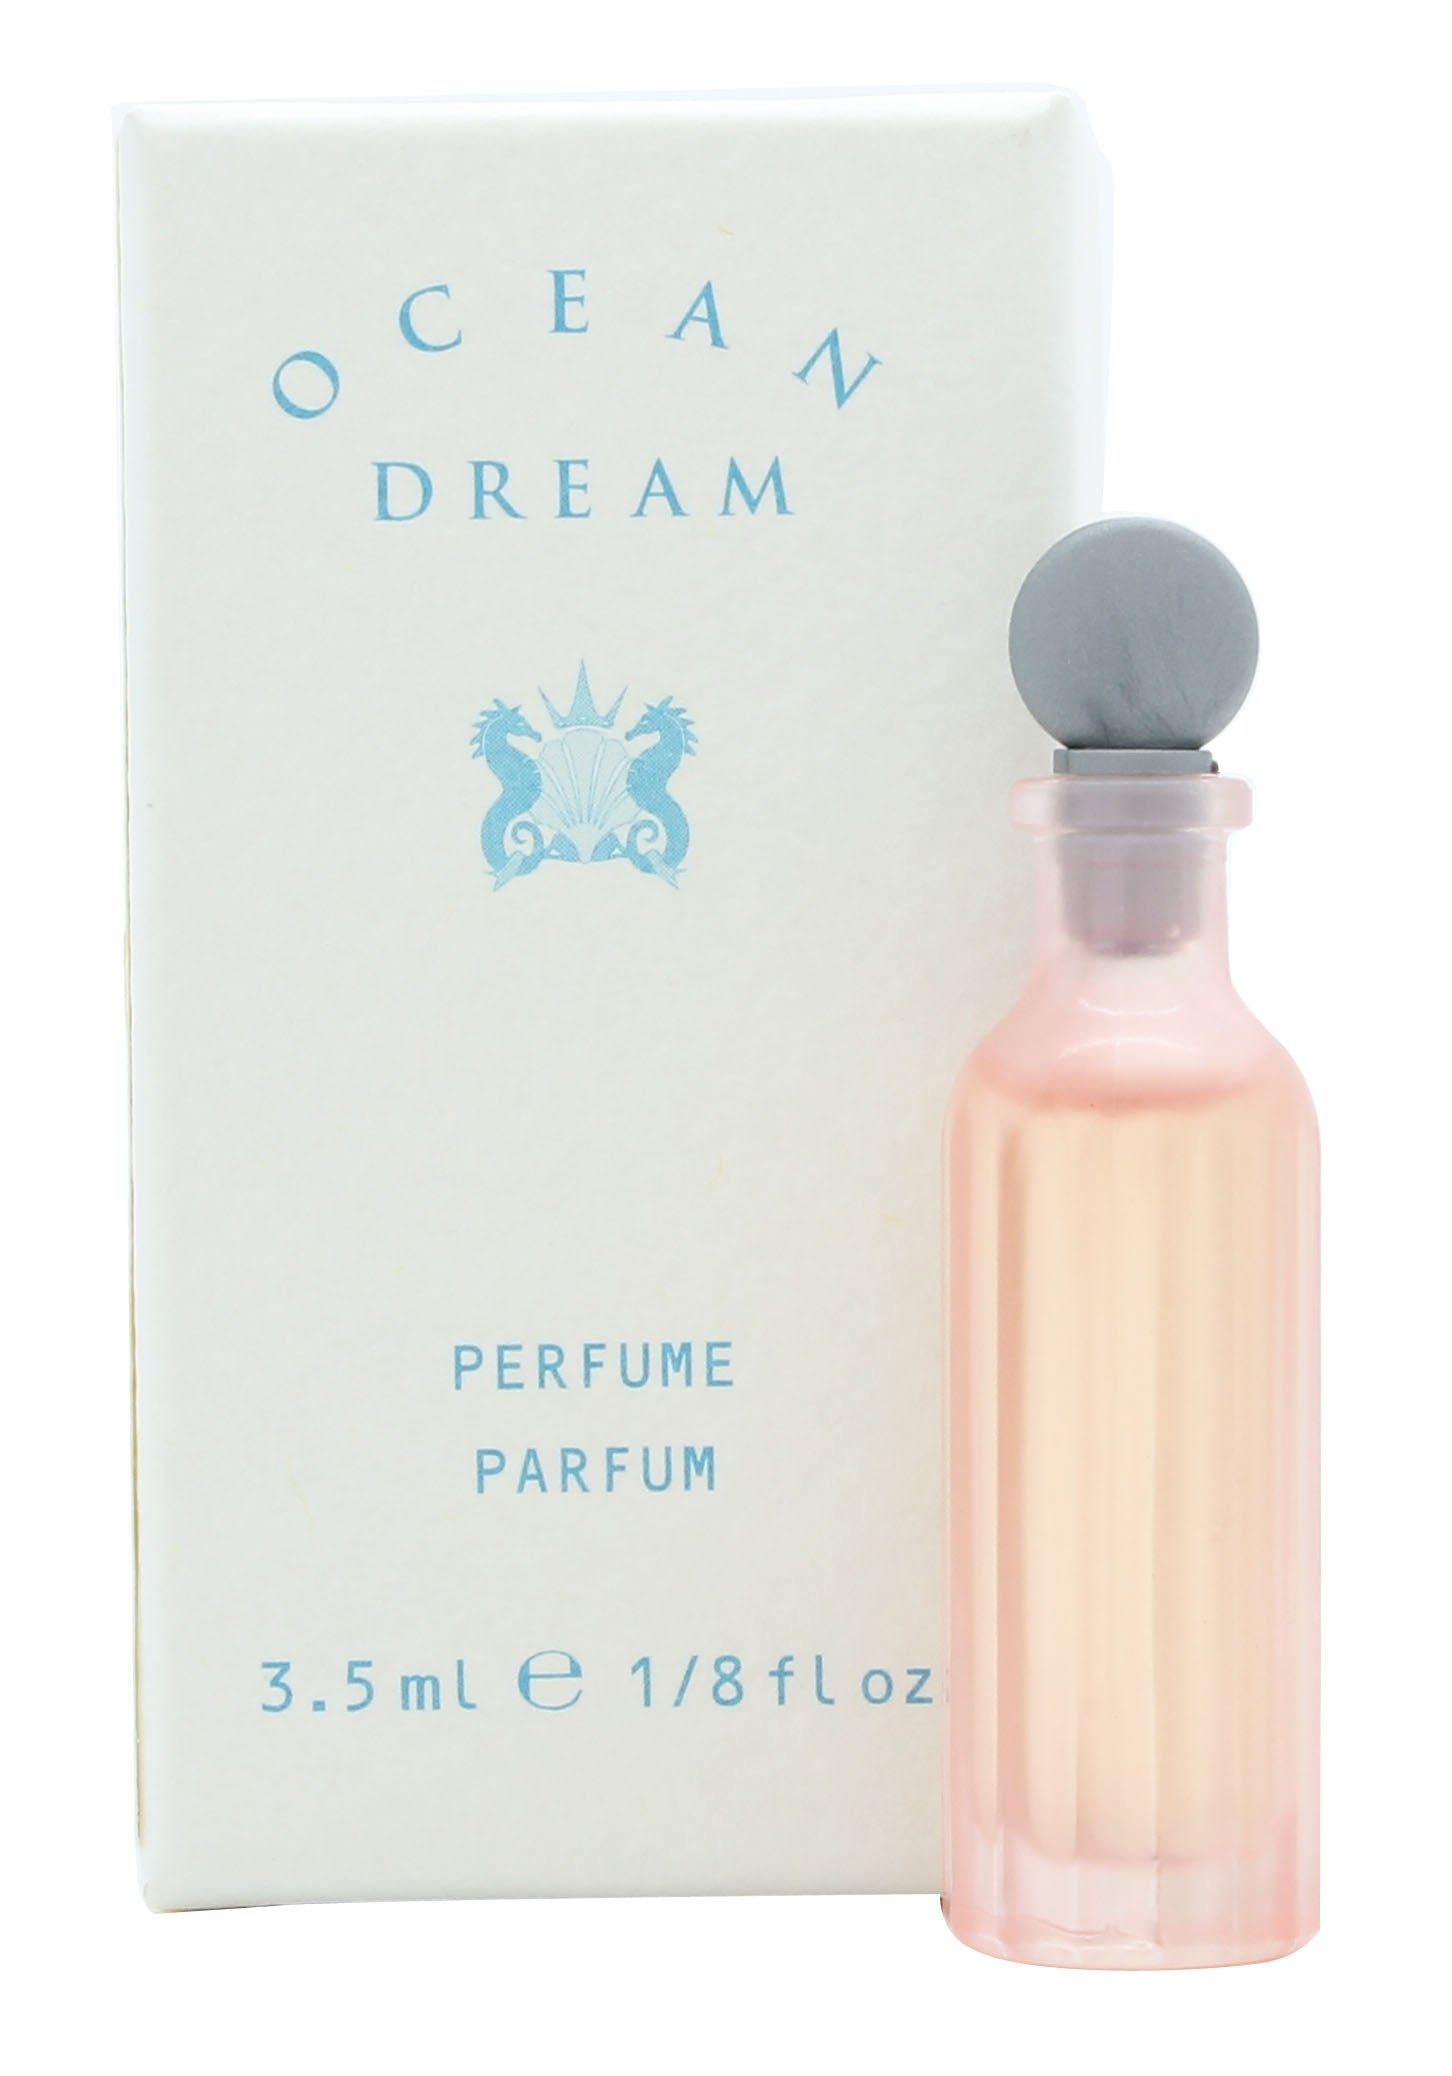 View Giorgio Beverly Hills Ocean Dream Eau de Parfum 35ml information